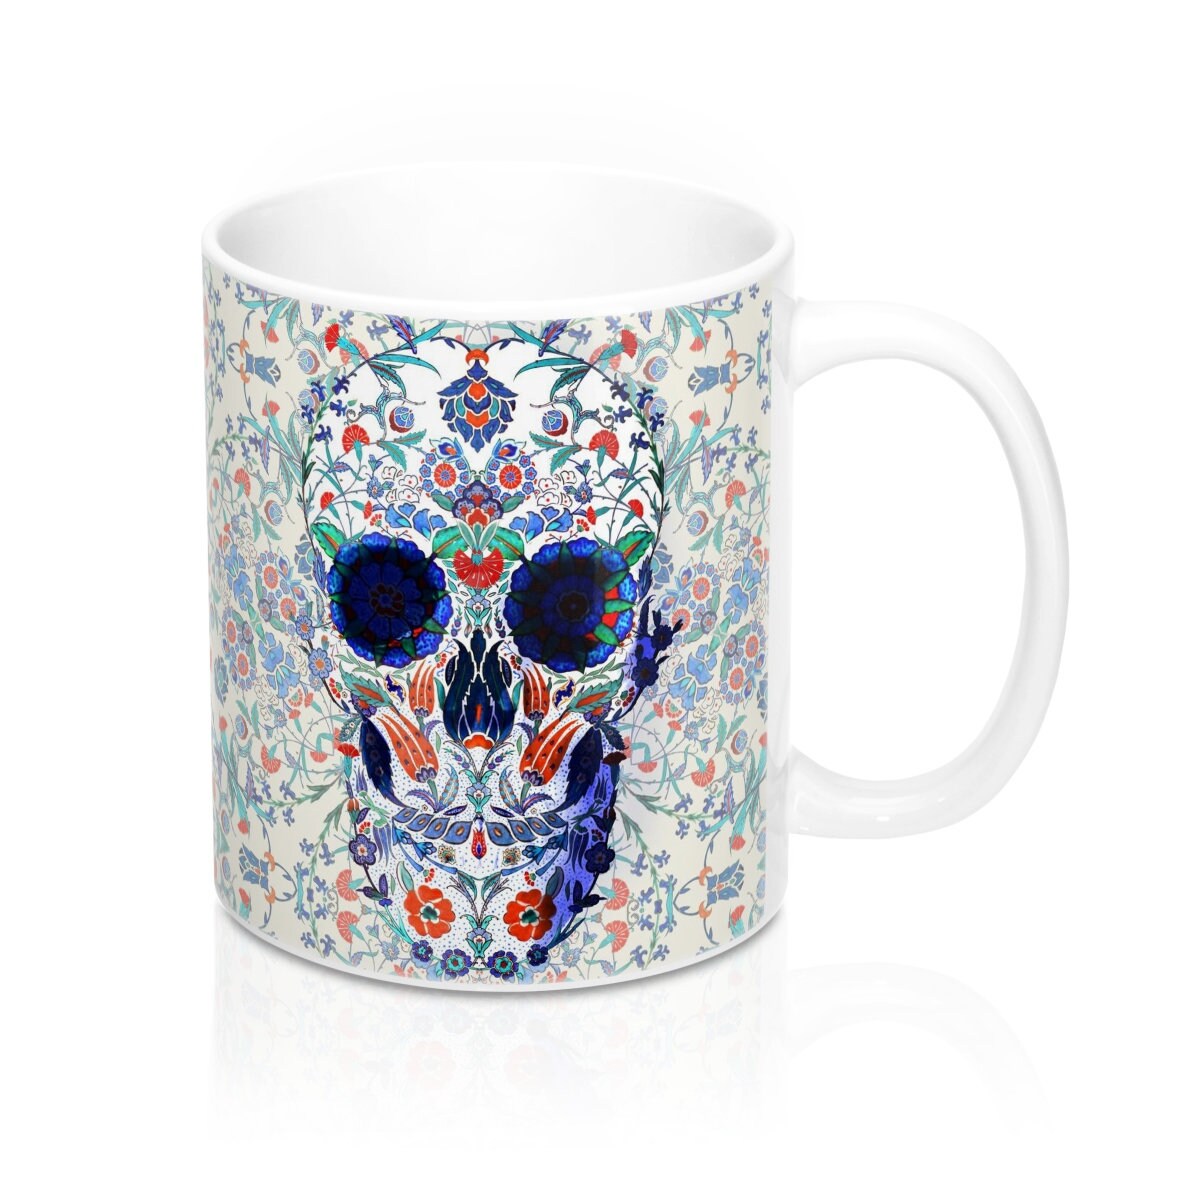 Flower Skull Coffee Mug 11oz, Sugar Skull Mug Gift, Tile Pattern Skull Ceramic Coffee Mug, Floral Skull Drawing Mug